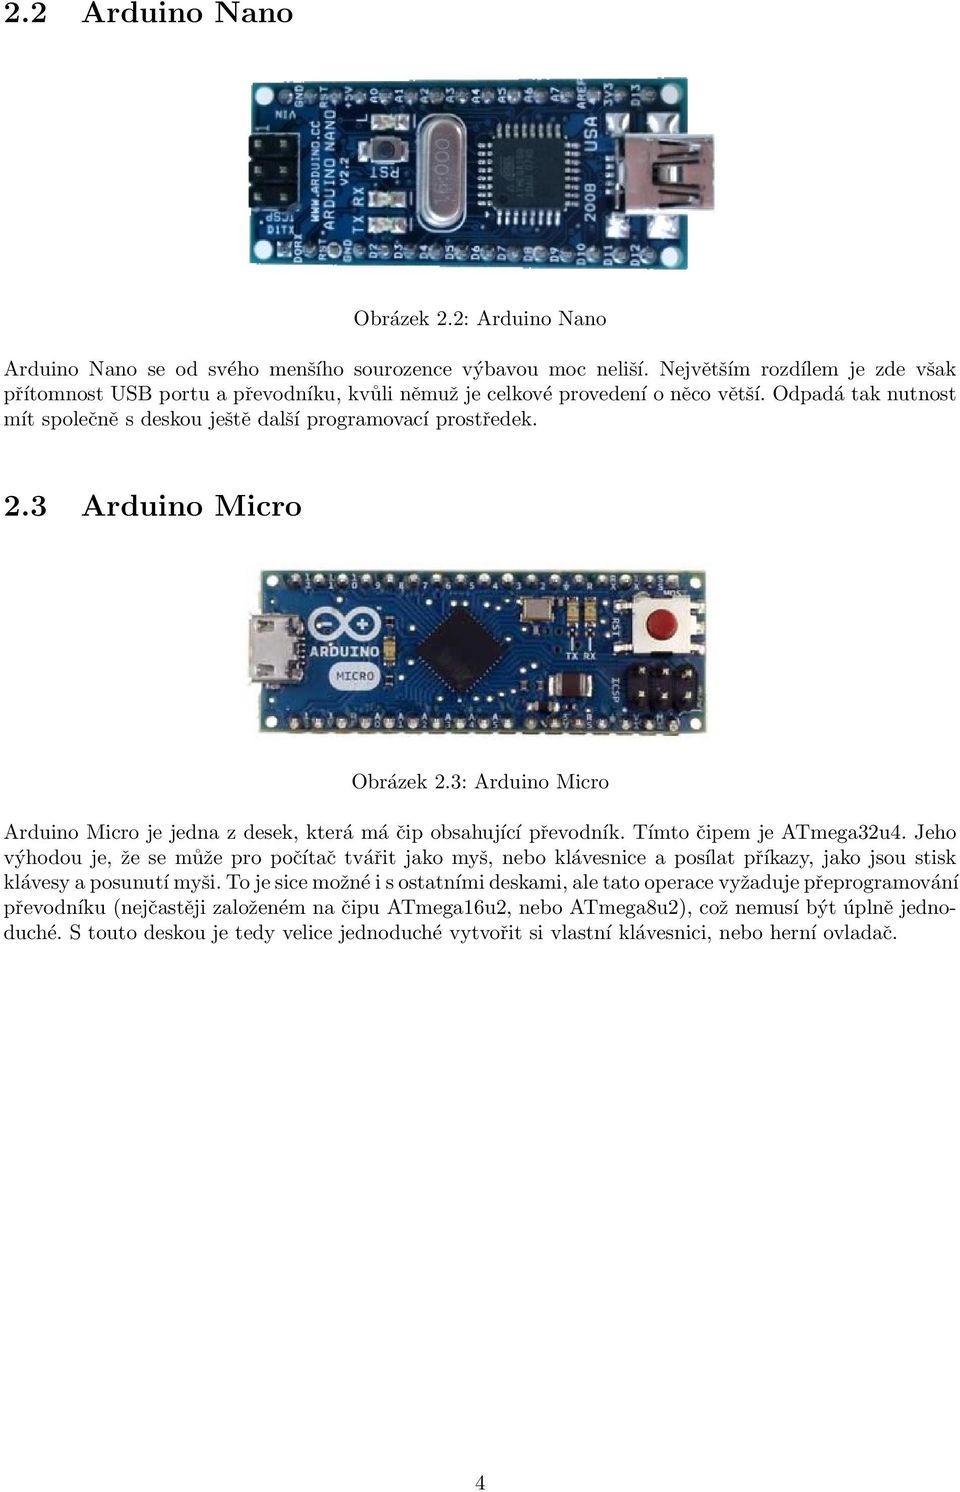 1 O Arduinu 2. 2 Typy desek Arduino Mini Arduino Nano Arduino Micro LilyPad Arduino  Arduino Fio... - PDF Free Download